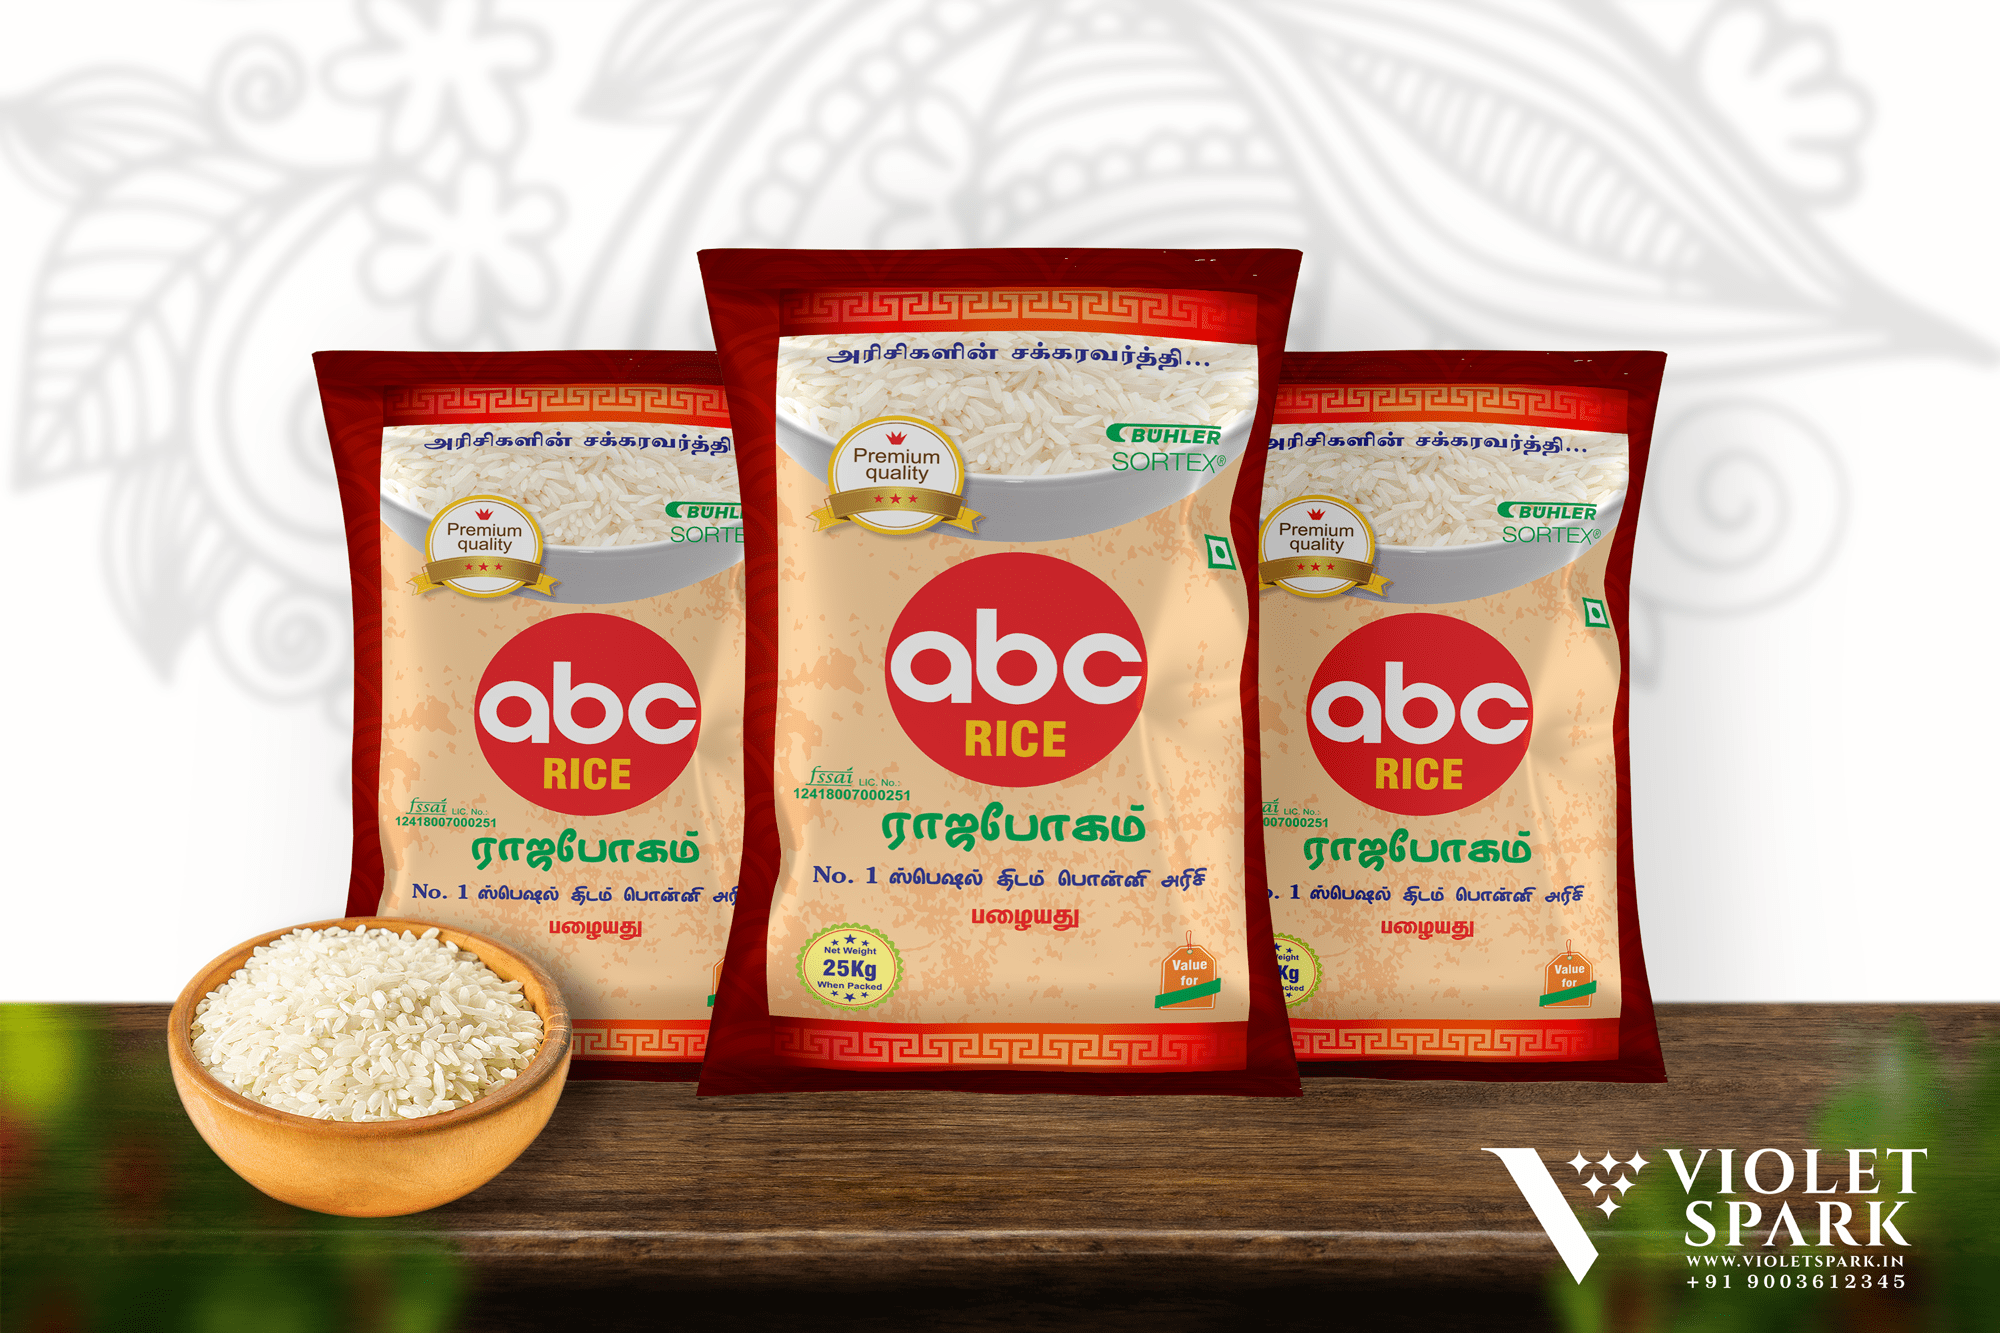 ABC Brand Rajabhogam Rice Bags Branding & Packaging Design in Erode by Violet Spark